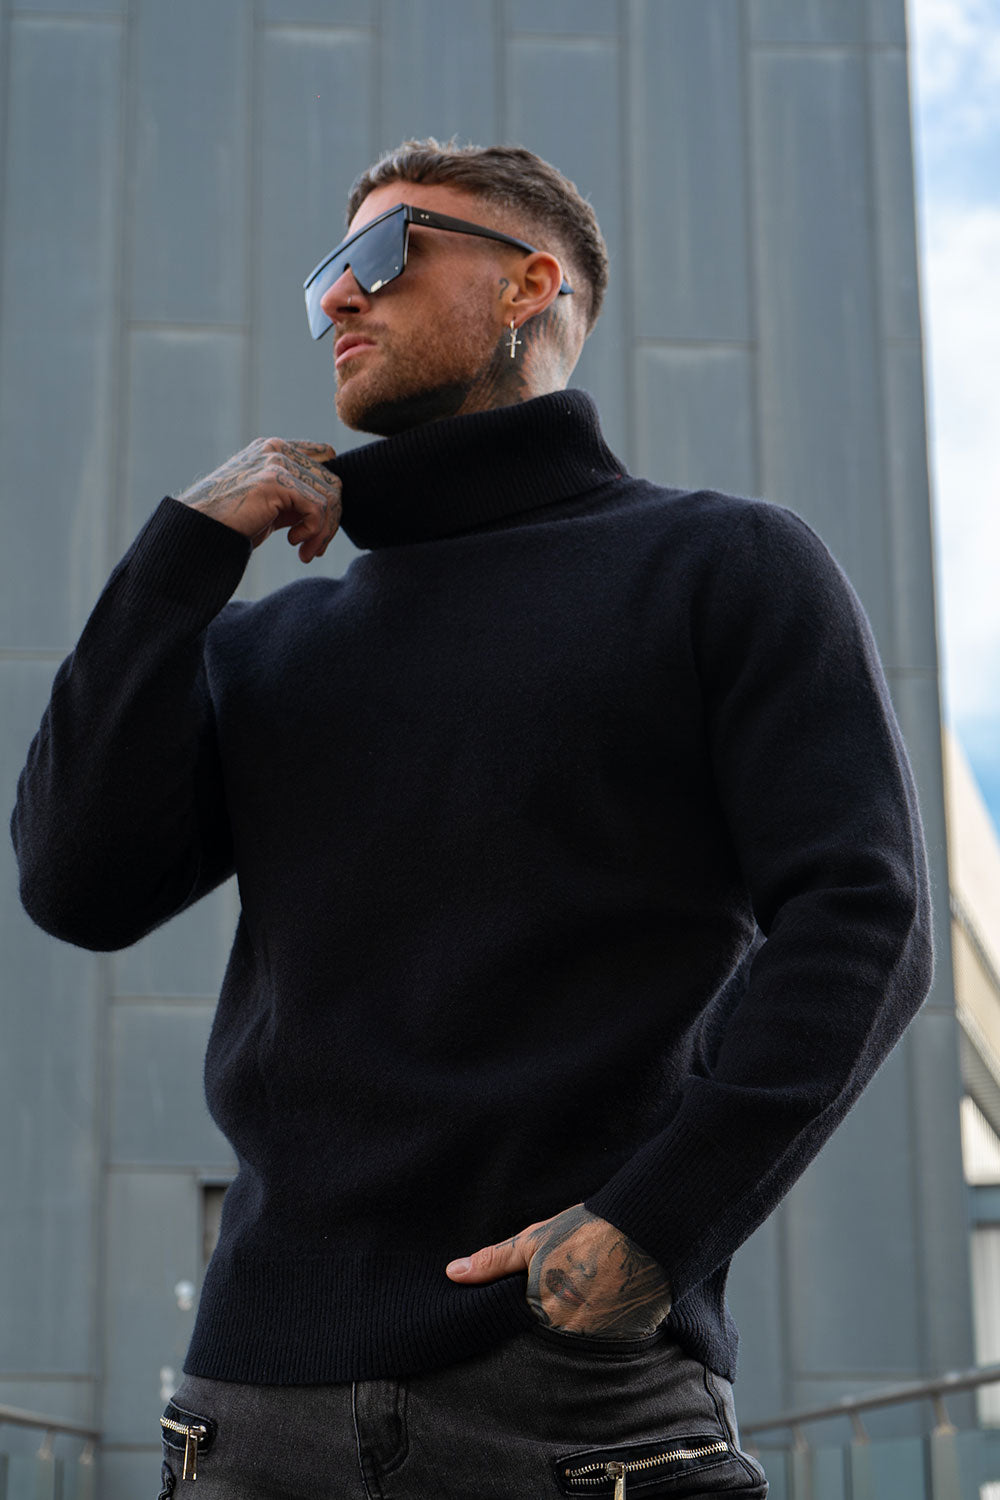 men's black turtleneck sweater